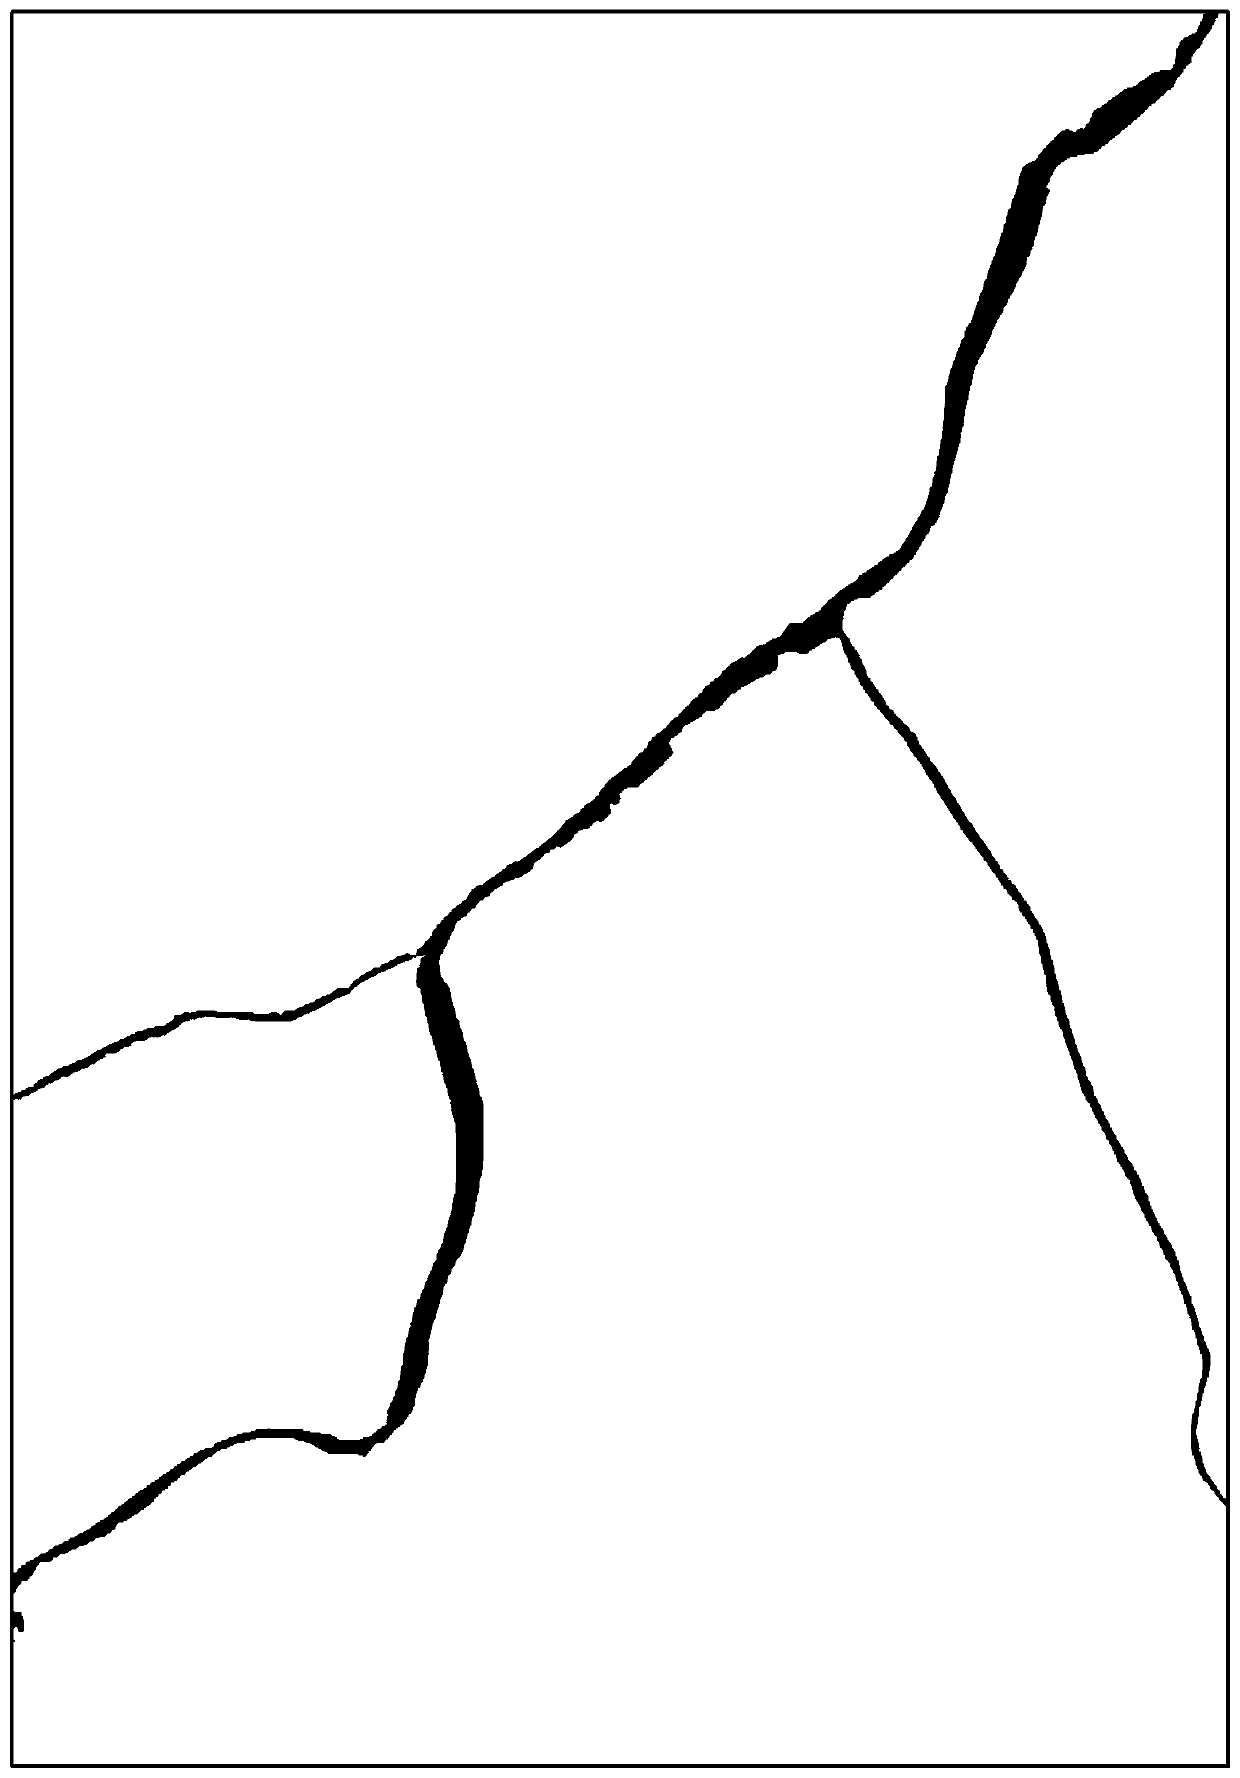 Method for constructing river channel data based on digital elevation model